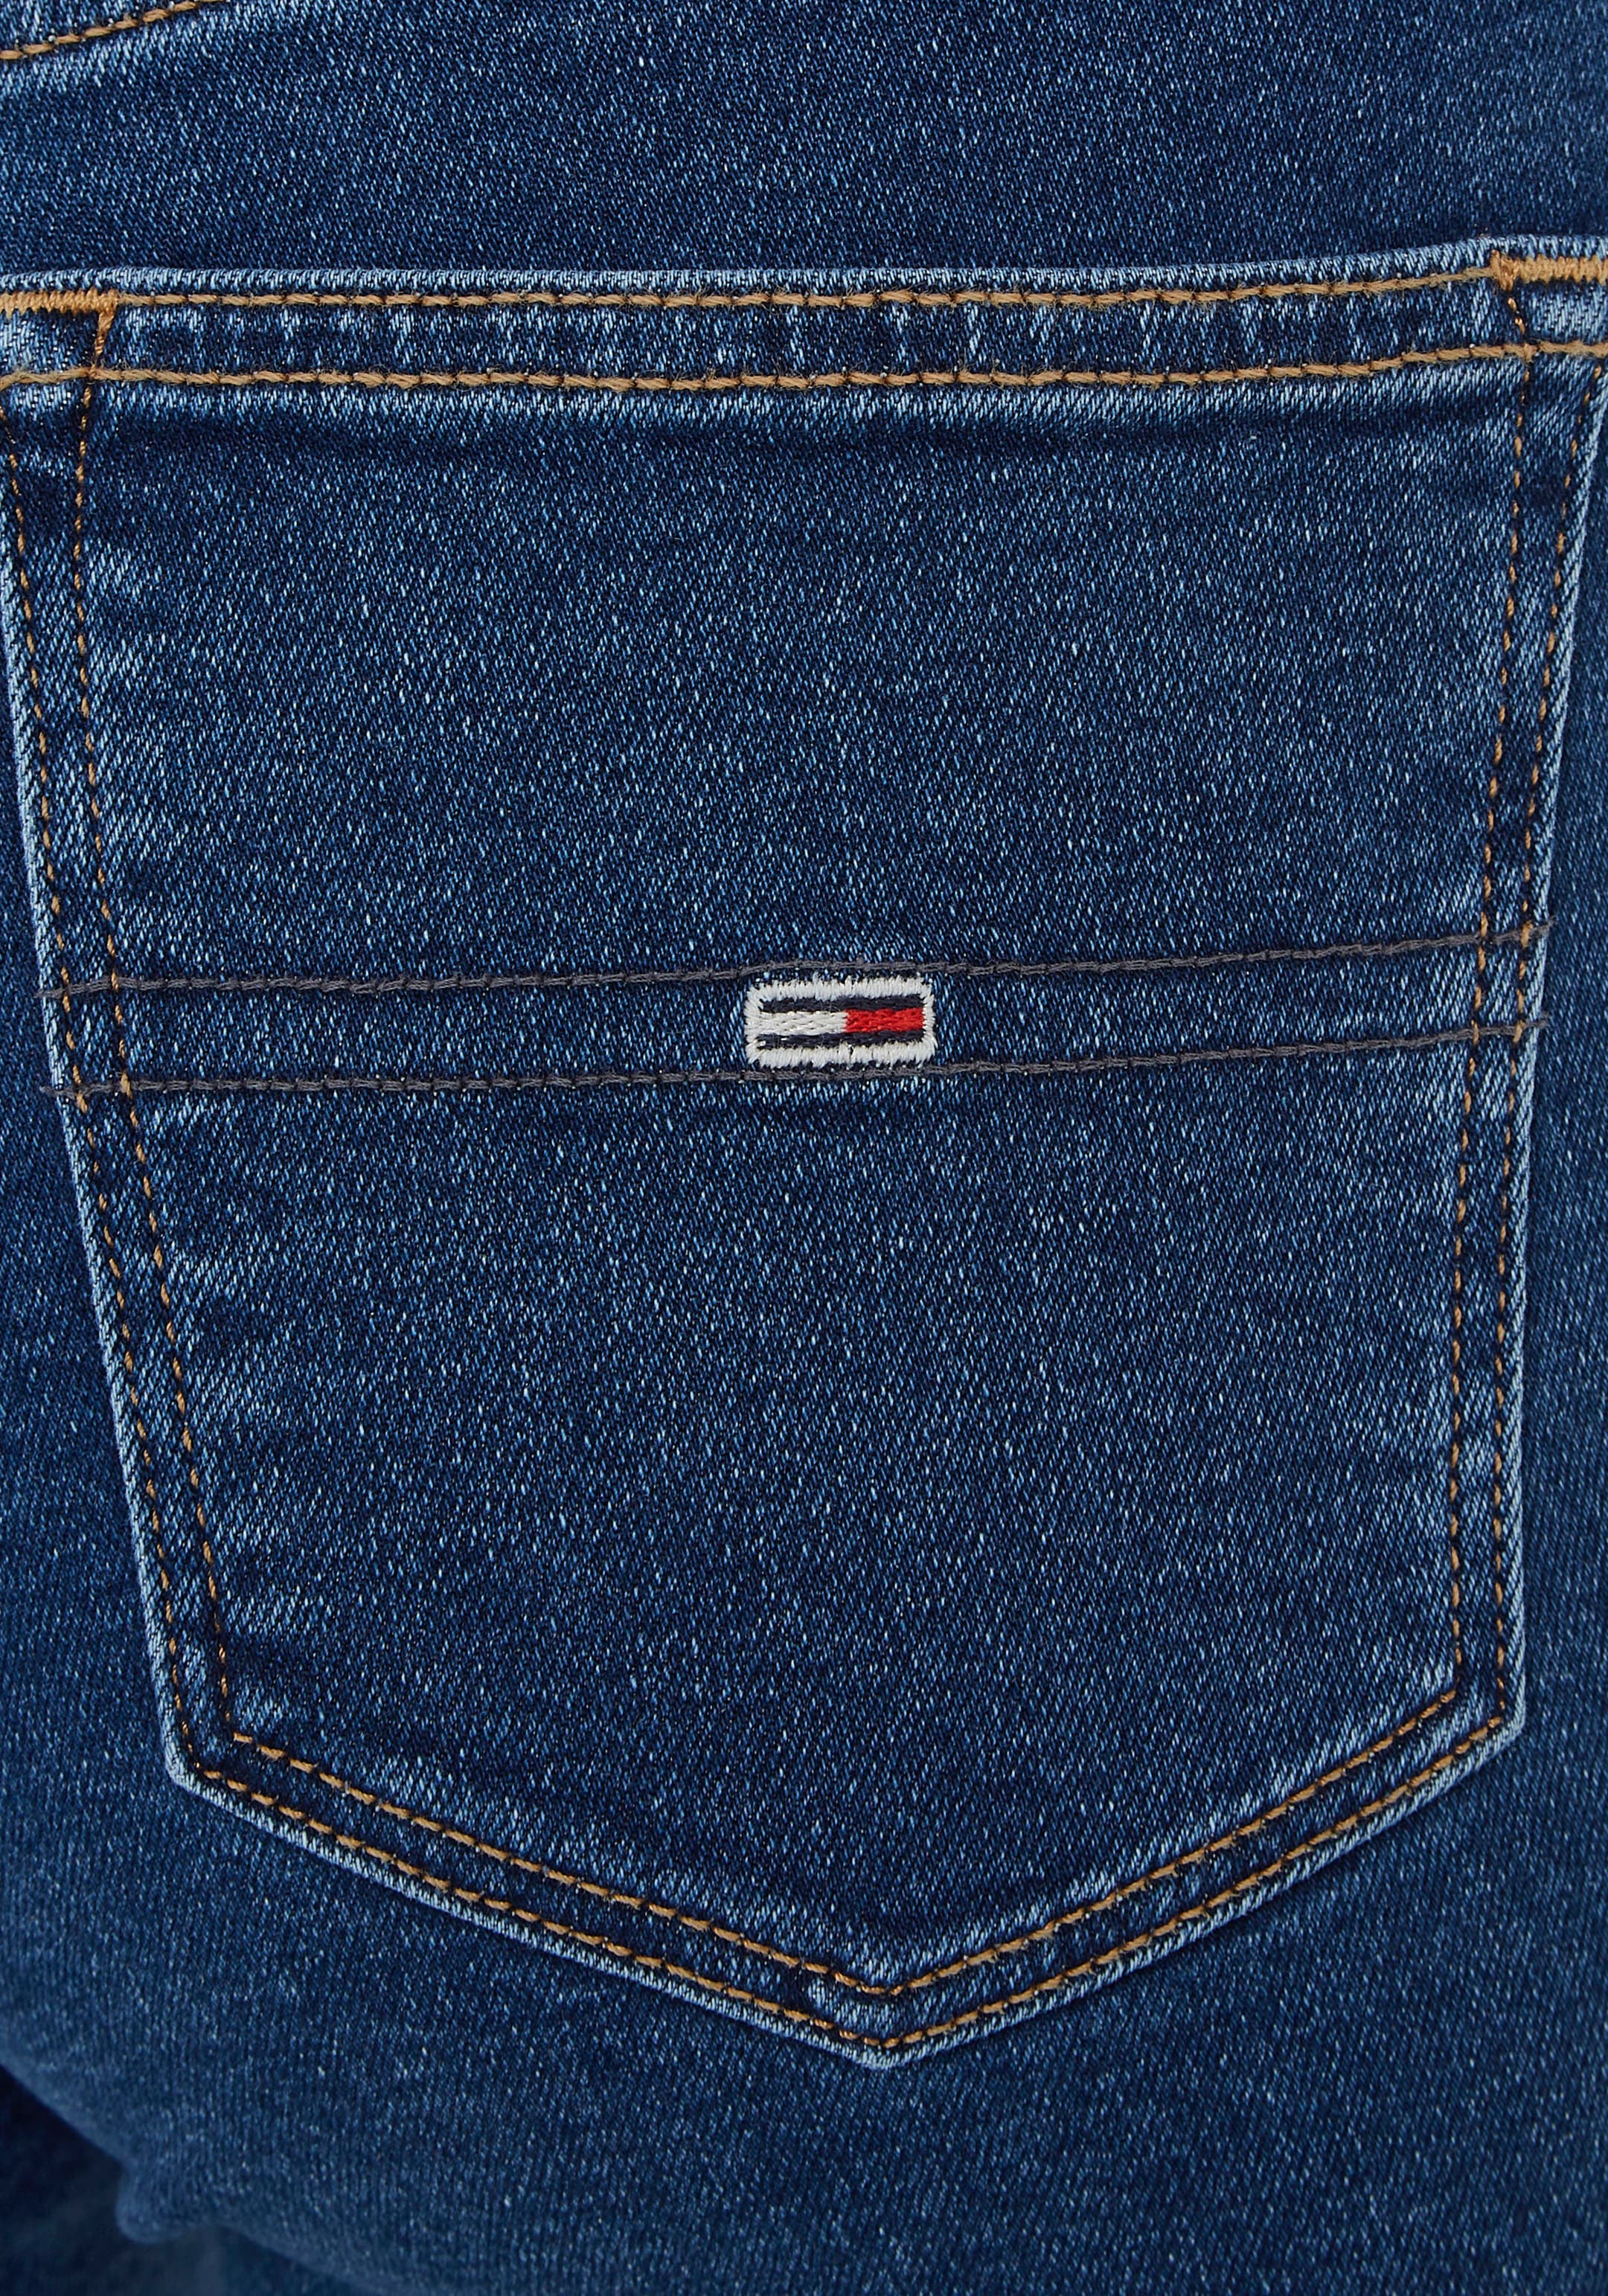 & mit ♕ hinten Label-Badge Passe Tommy kaufen Tommy »Nora«, versandkostenfrei Jeans Jeans Skinny-fit-Jeans